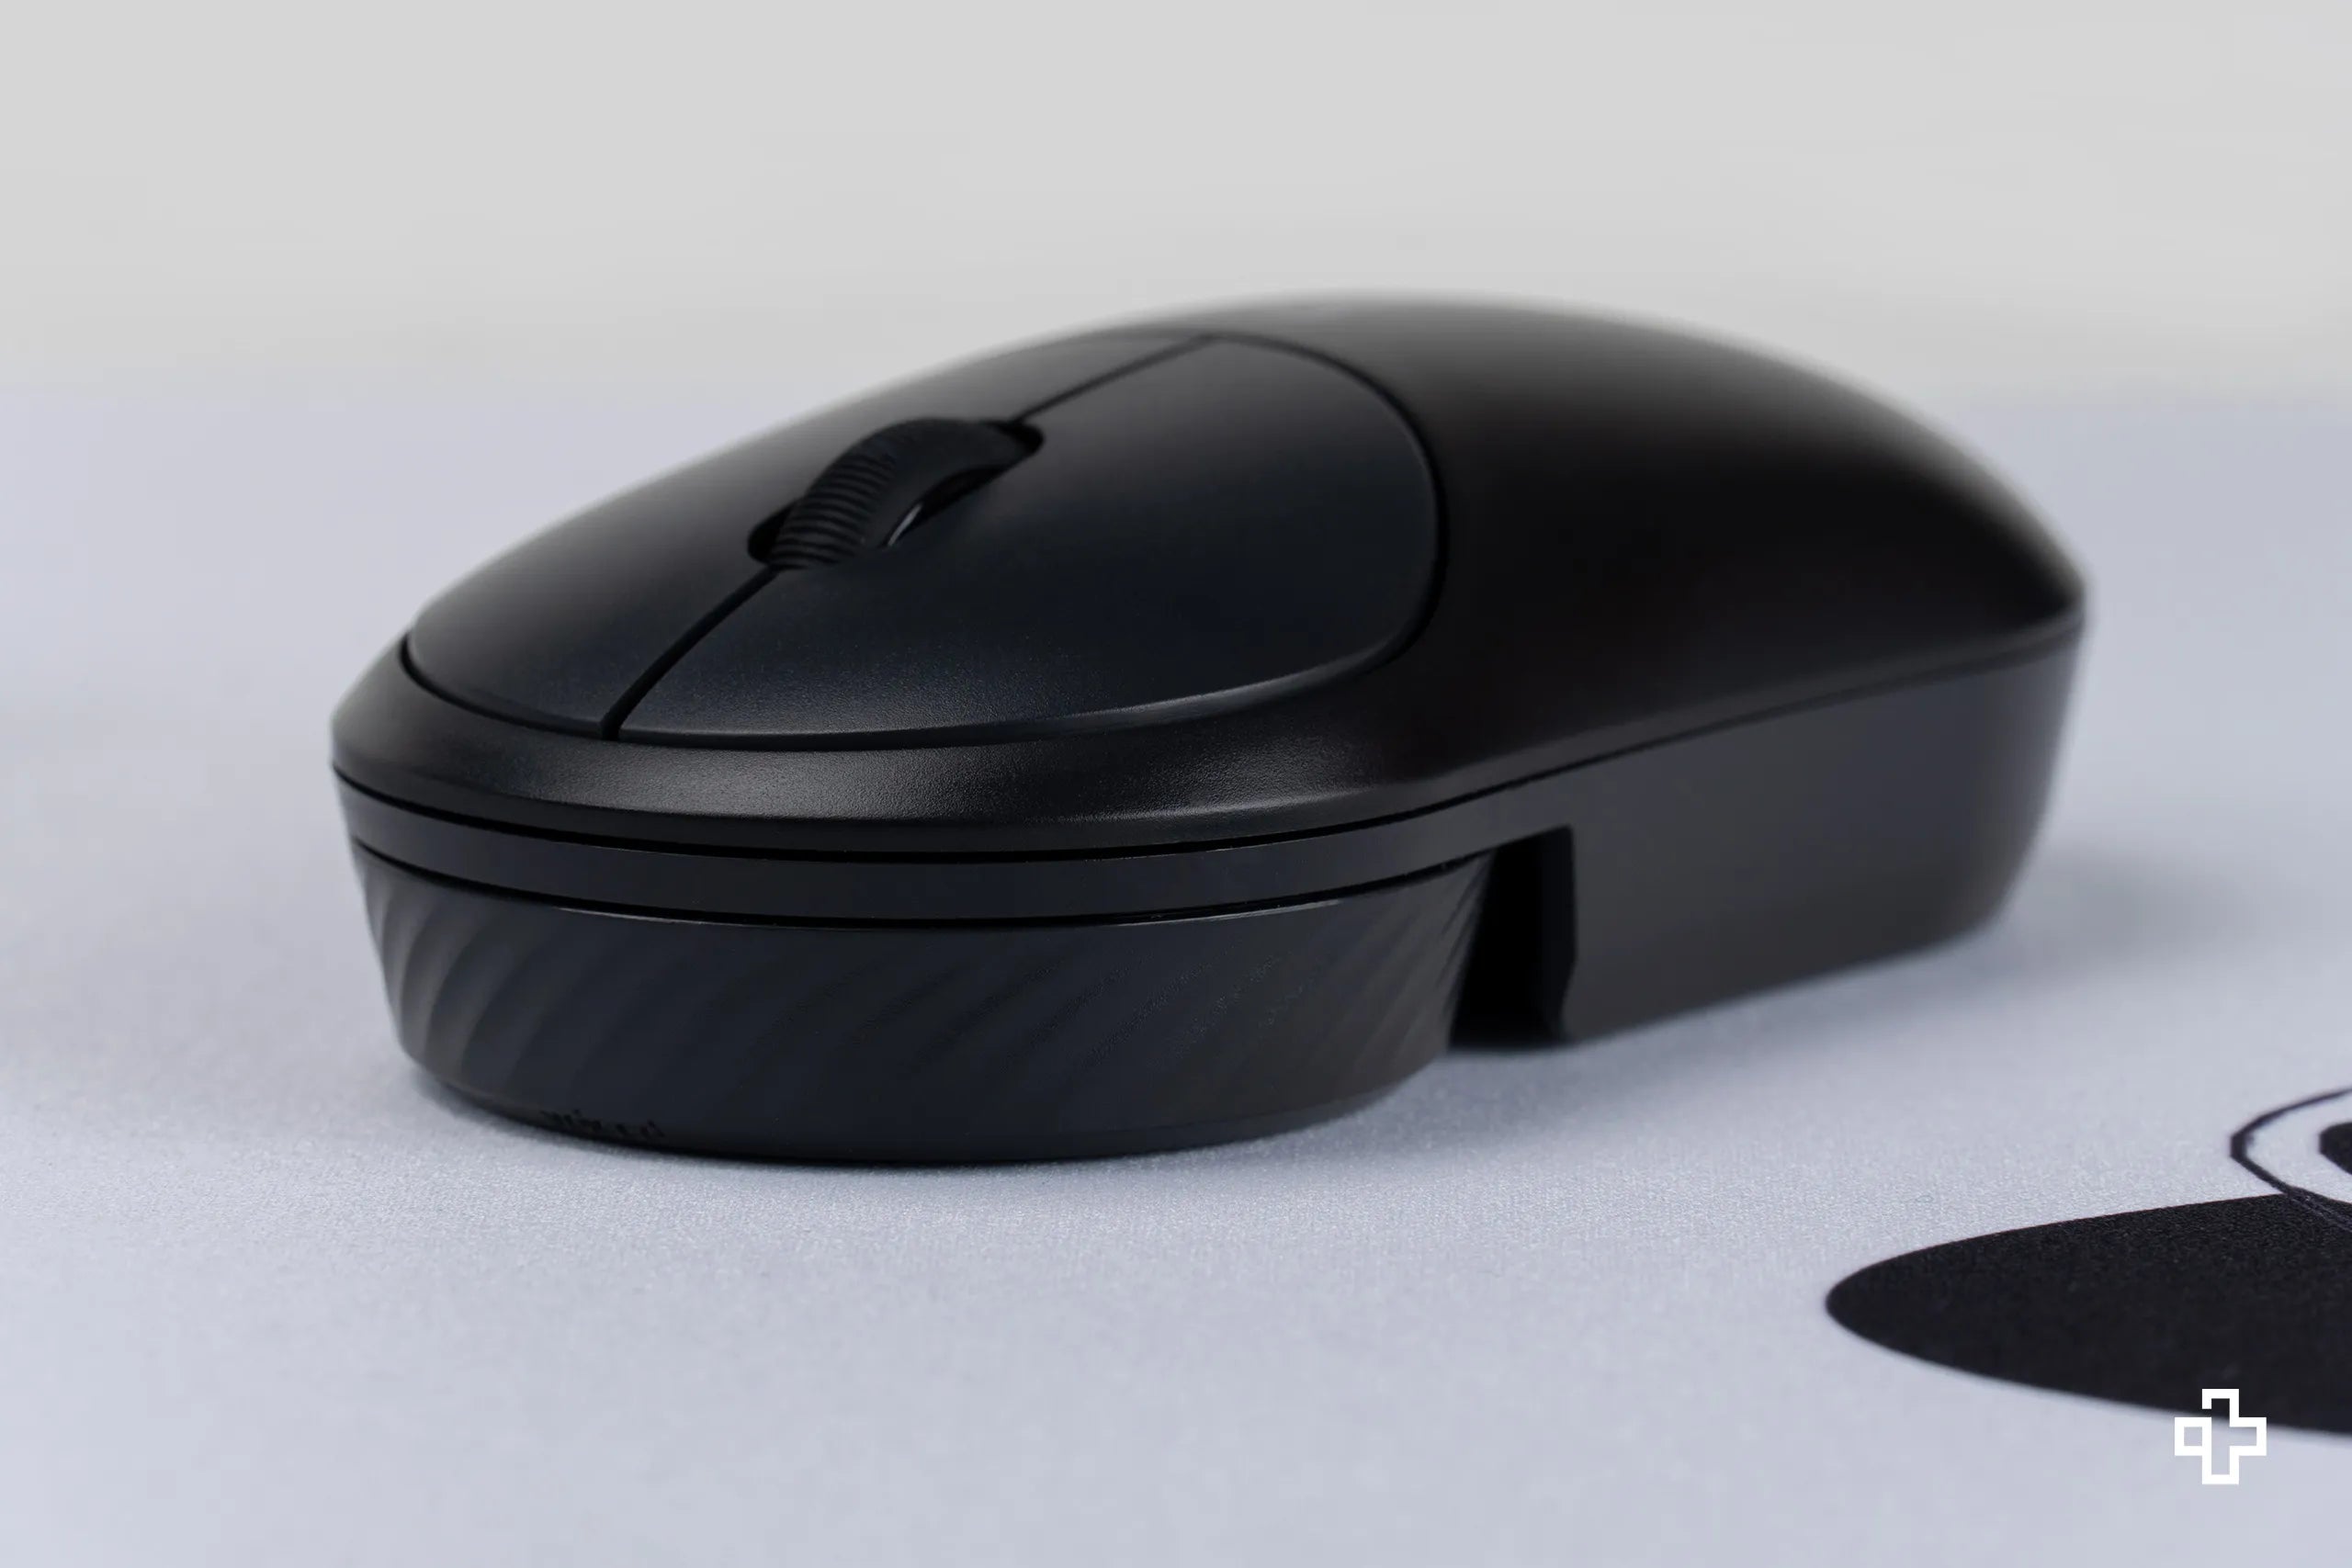 Mouse Dareu UFO Wireless Bluetooth Silentios Office